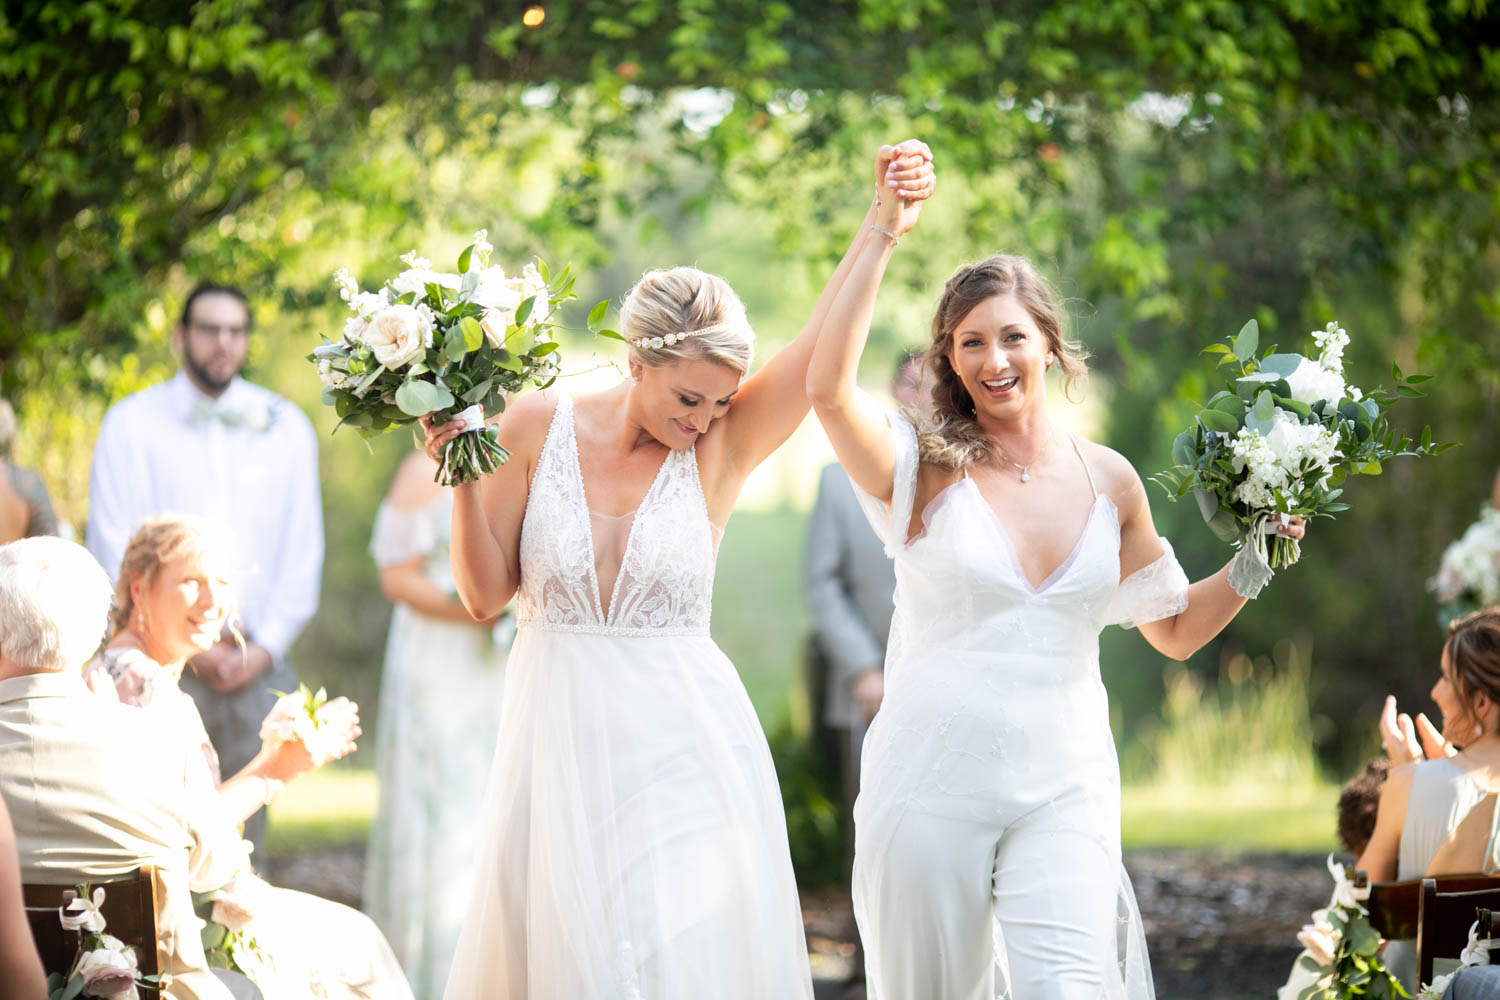 Meagan + Kristyn: an Austin, Texas, luxury outdoor wedding